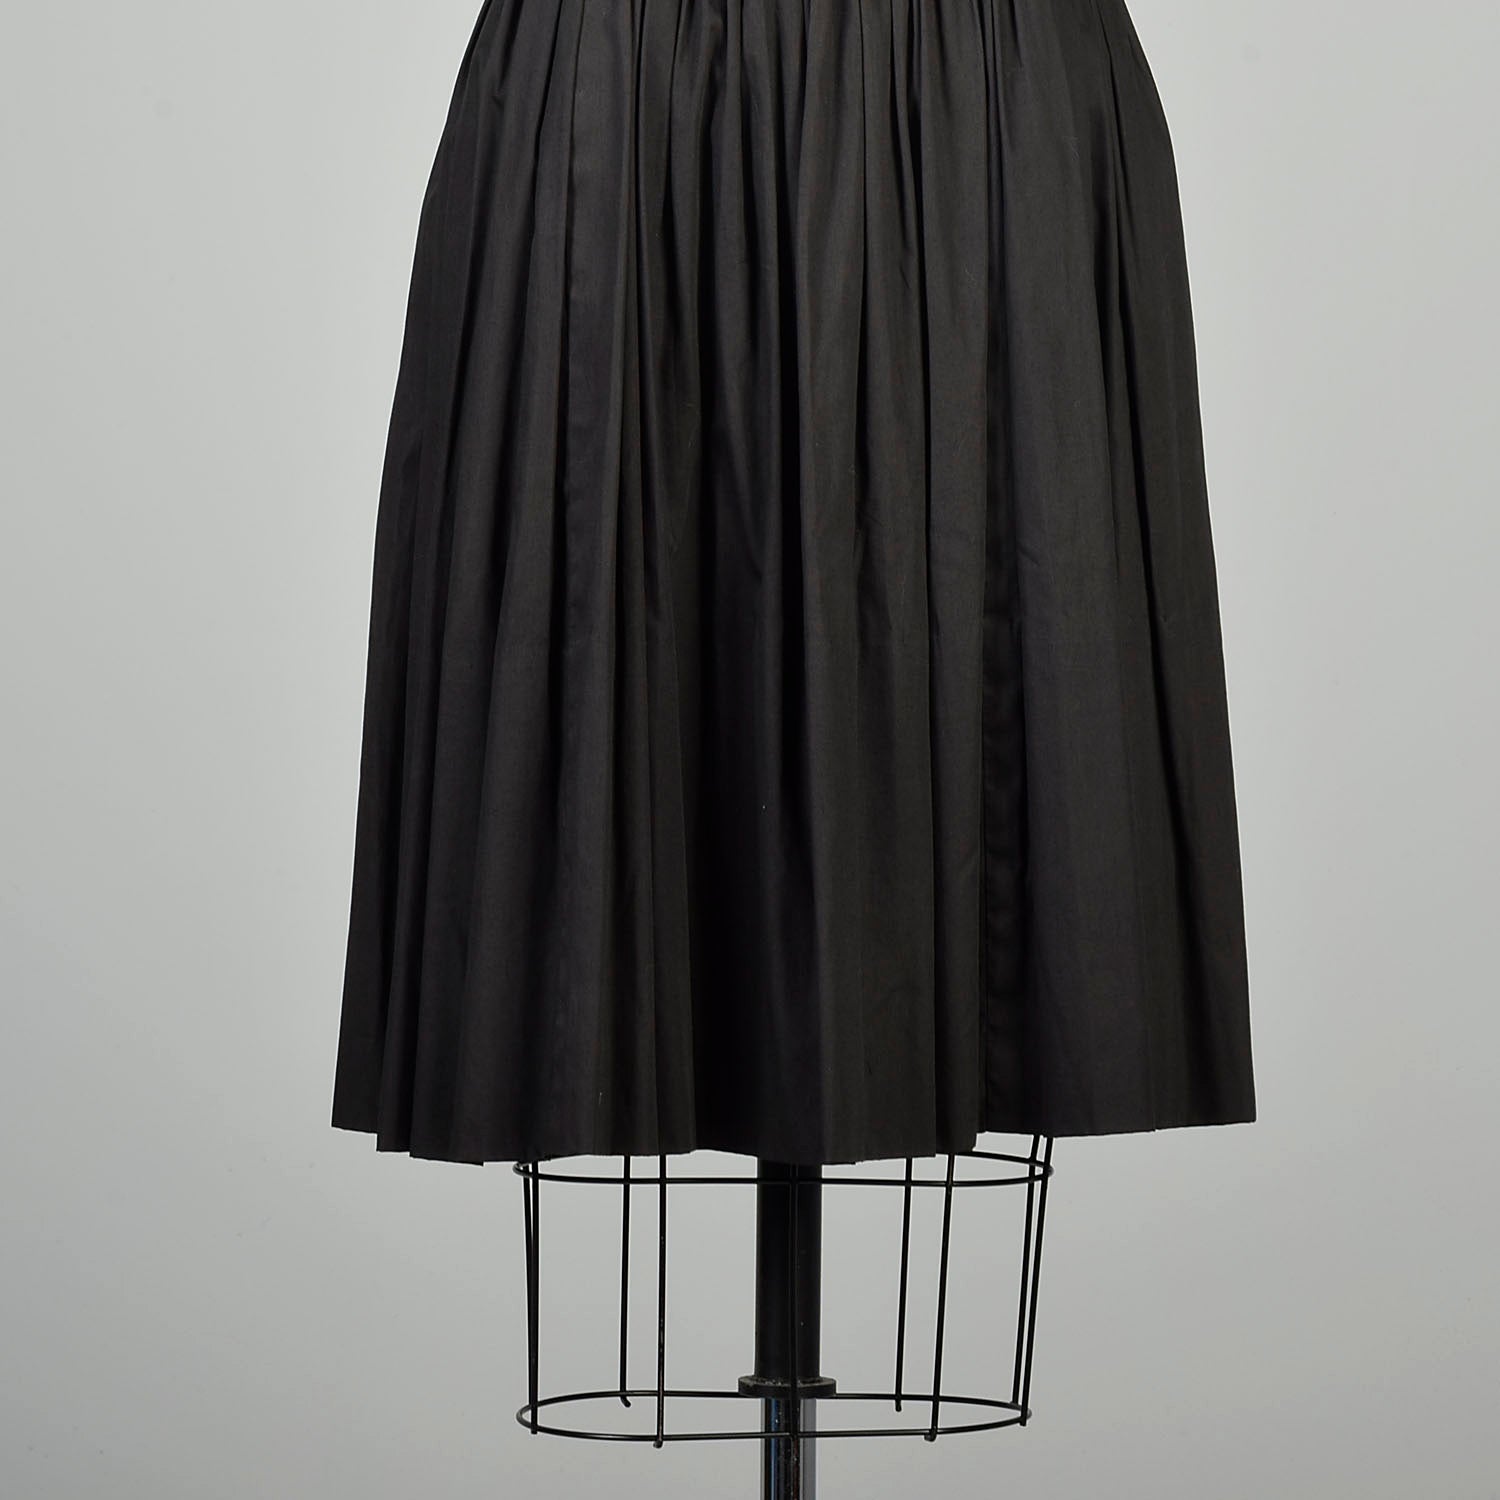 Small1950s LBD Little Black Dress Cotton Sleeveless